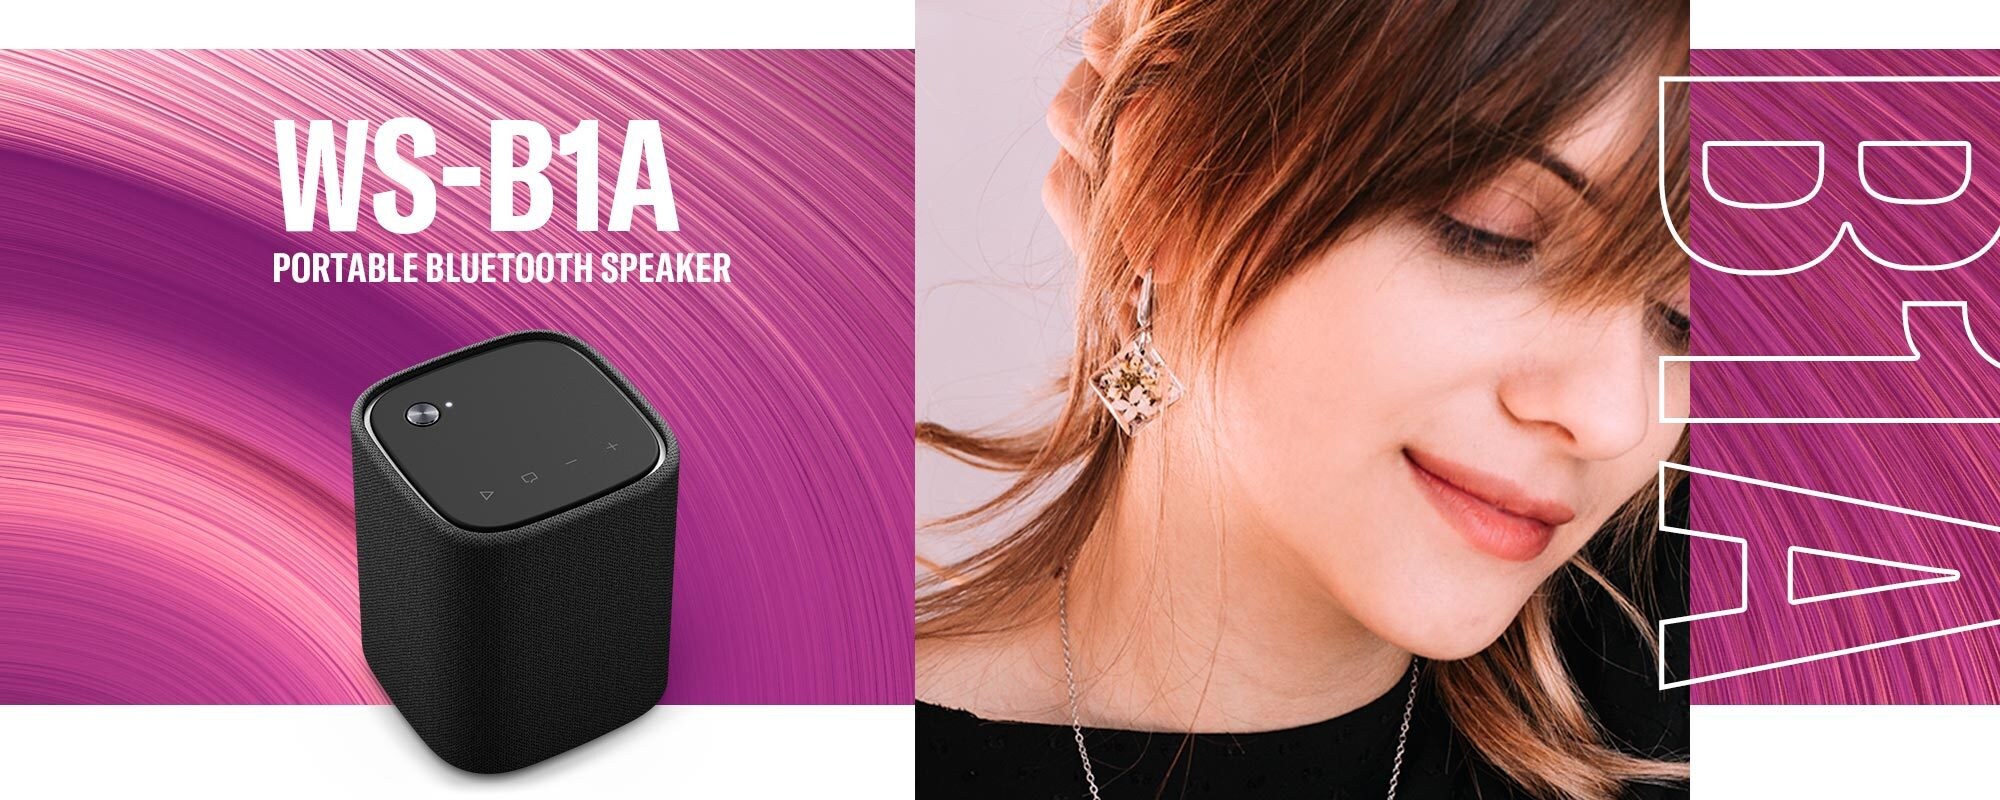 WS-B1A Portable Bluetooth Speaker - USA Yamaha